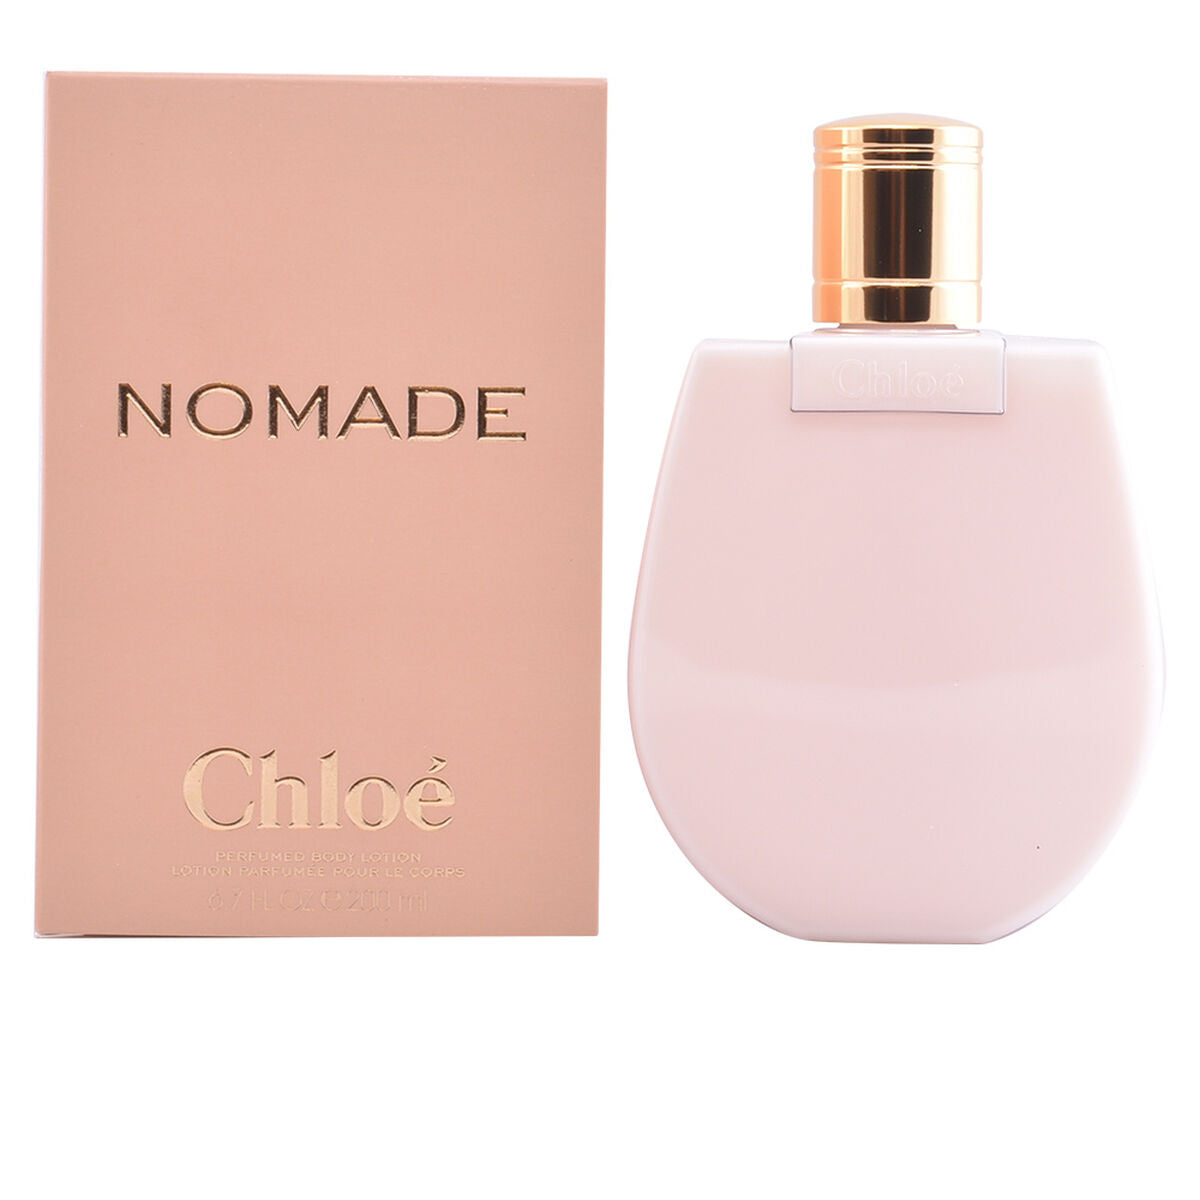 Lotion corporelle Chloe Nomade (200 ml)